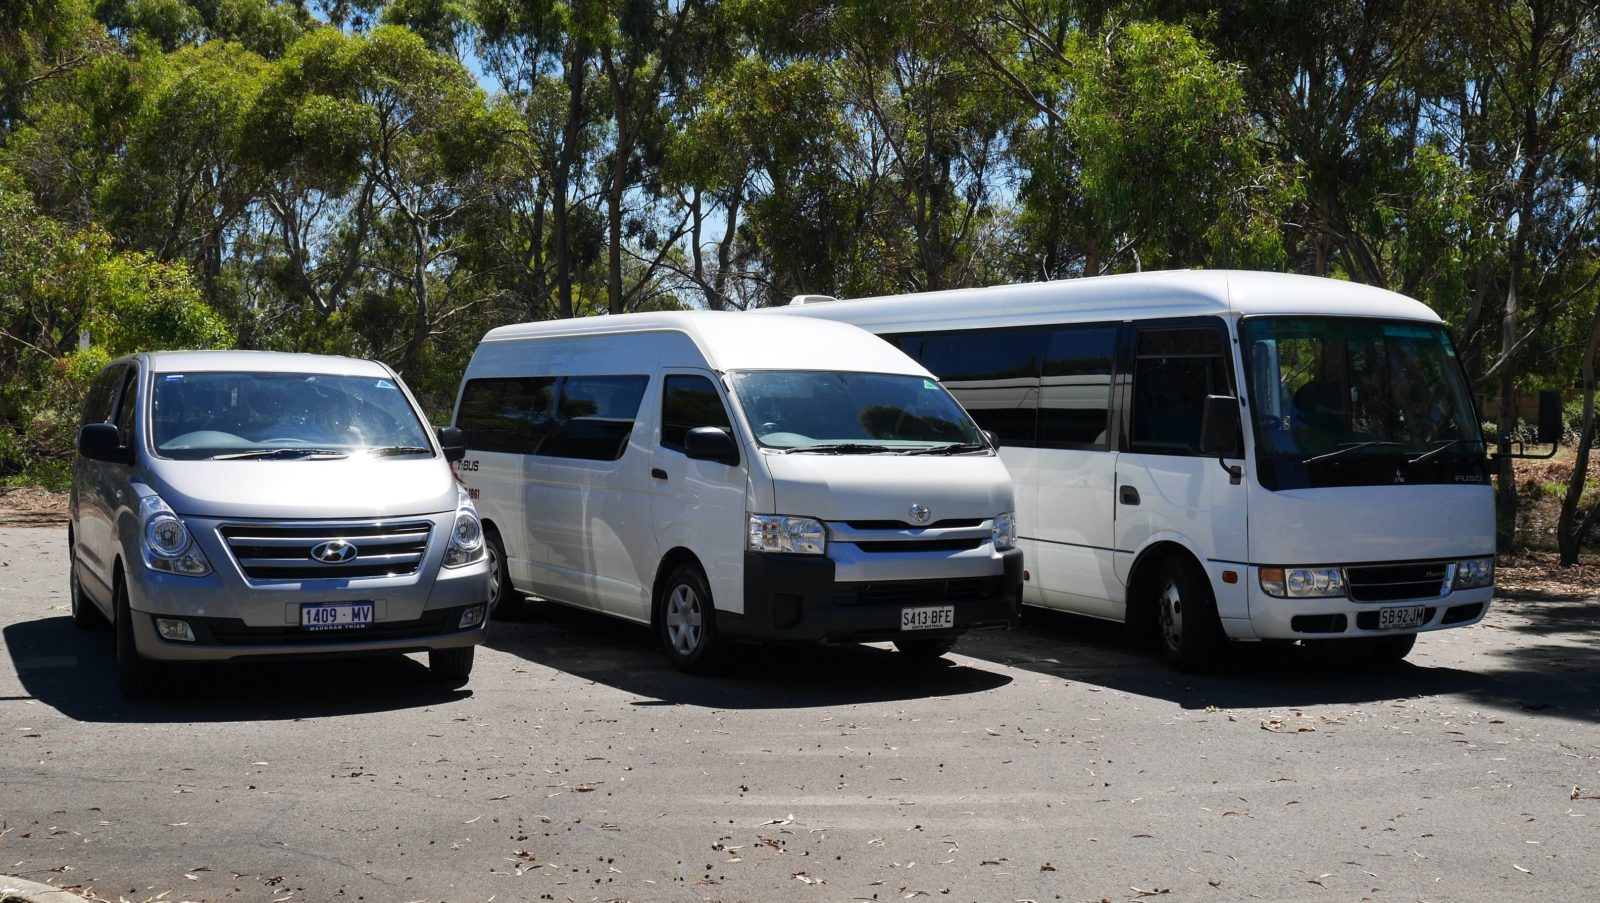 Adelaide Transport T.BUS fleet -7, 13 and 24 seat passengers mini buses